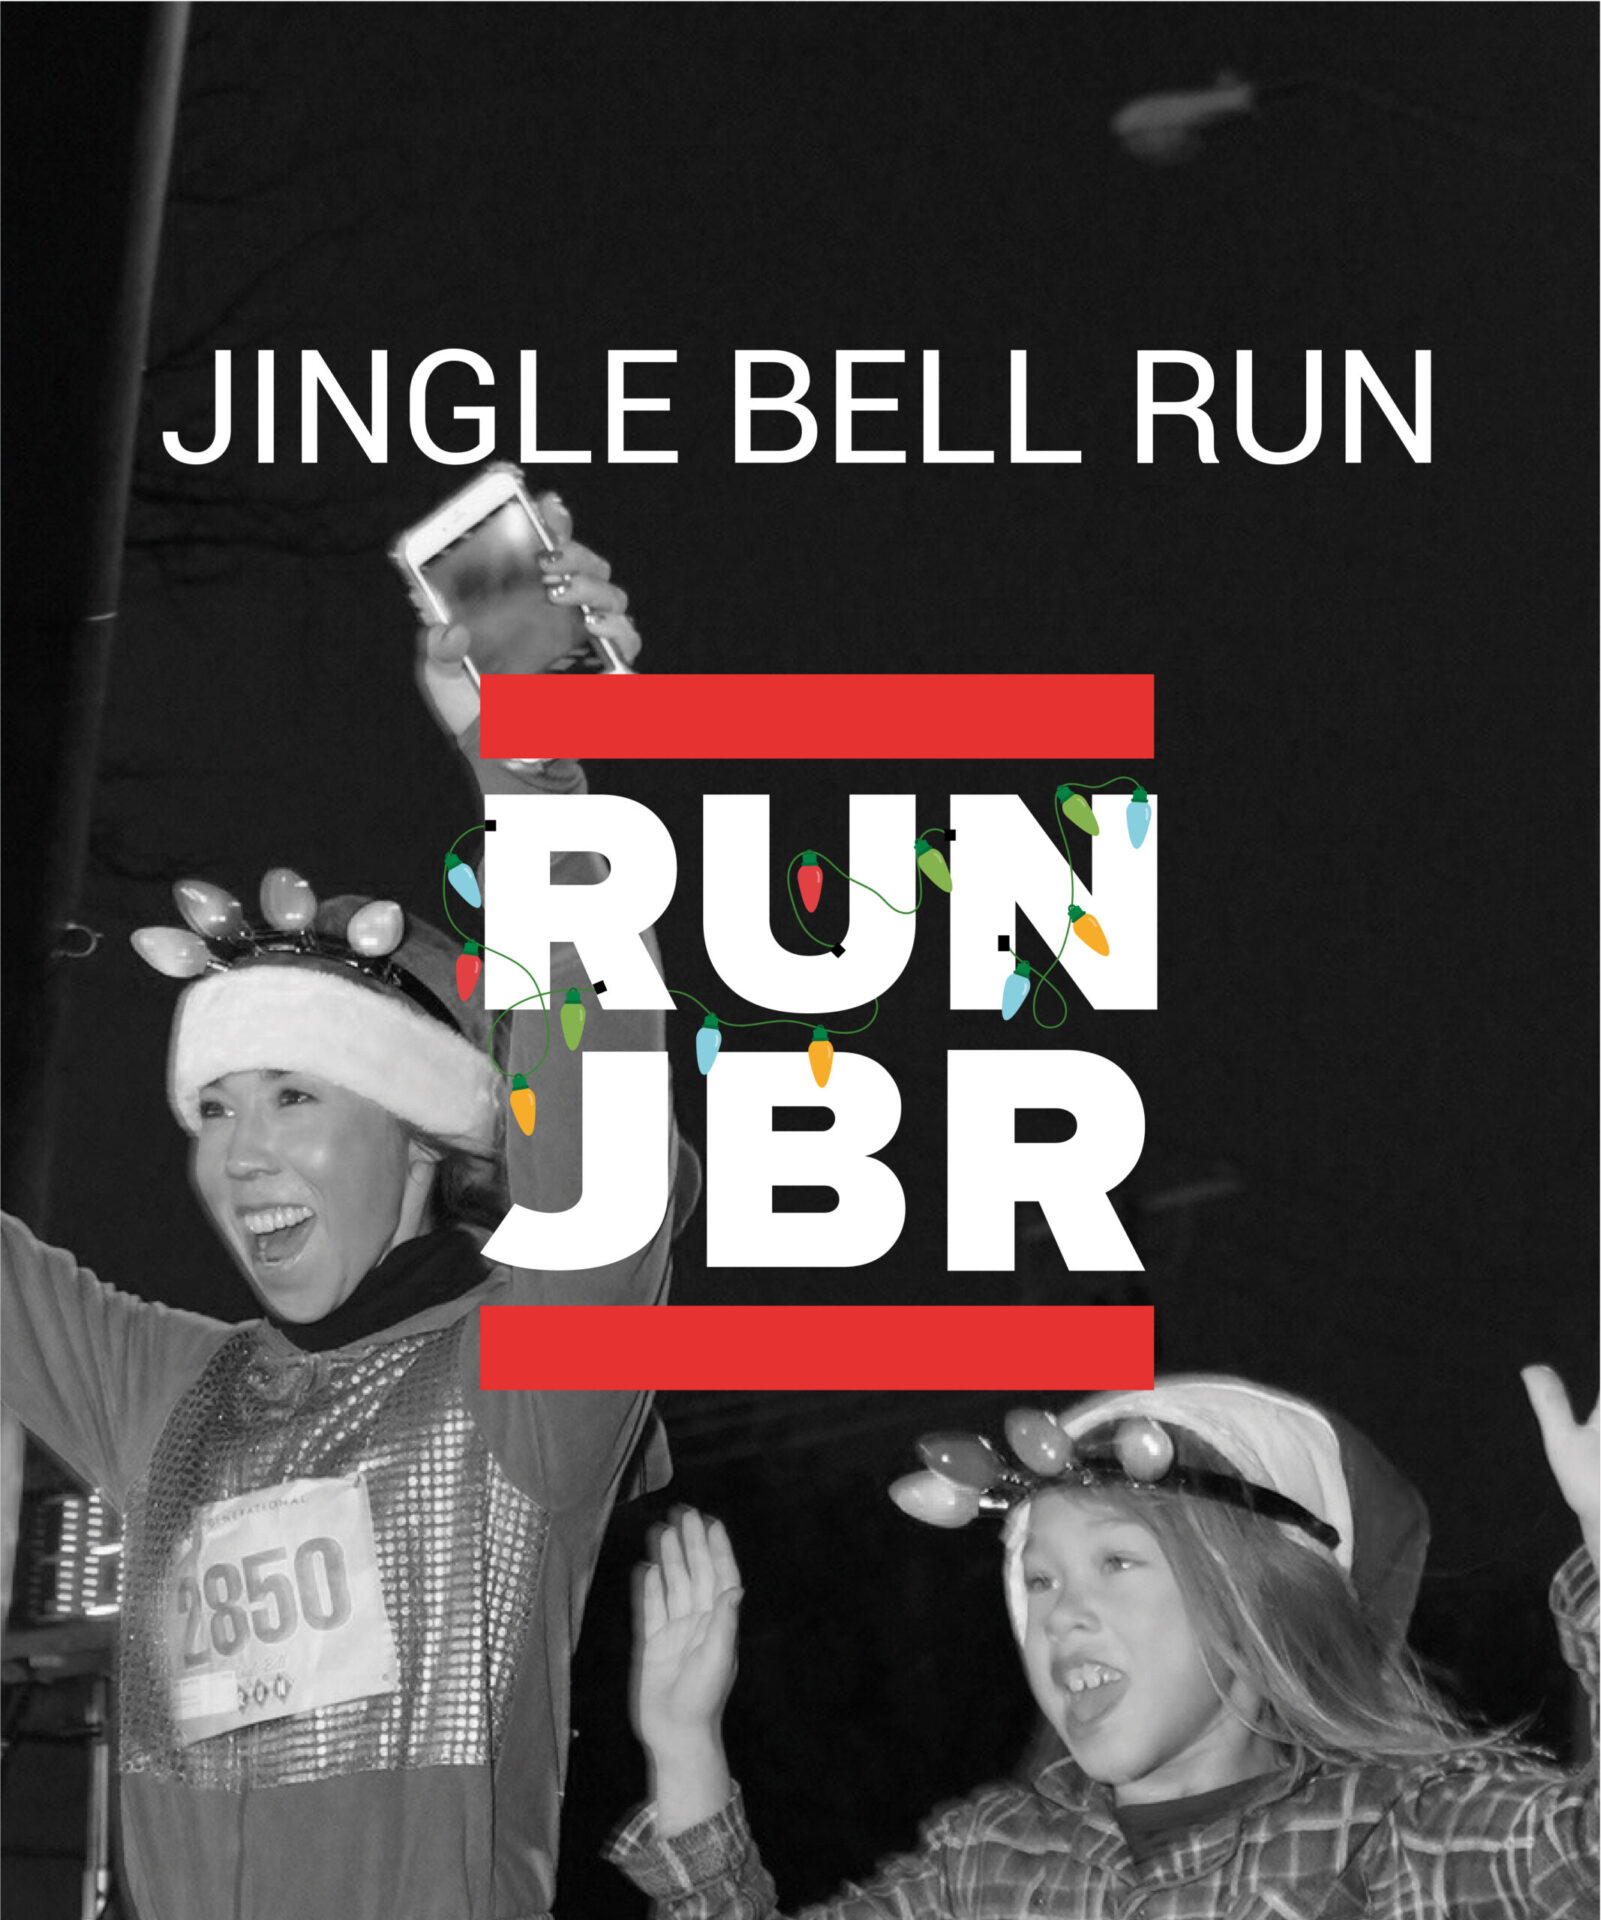 Dallas Jingle Bell Run